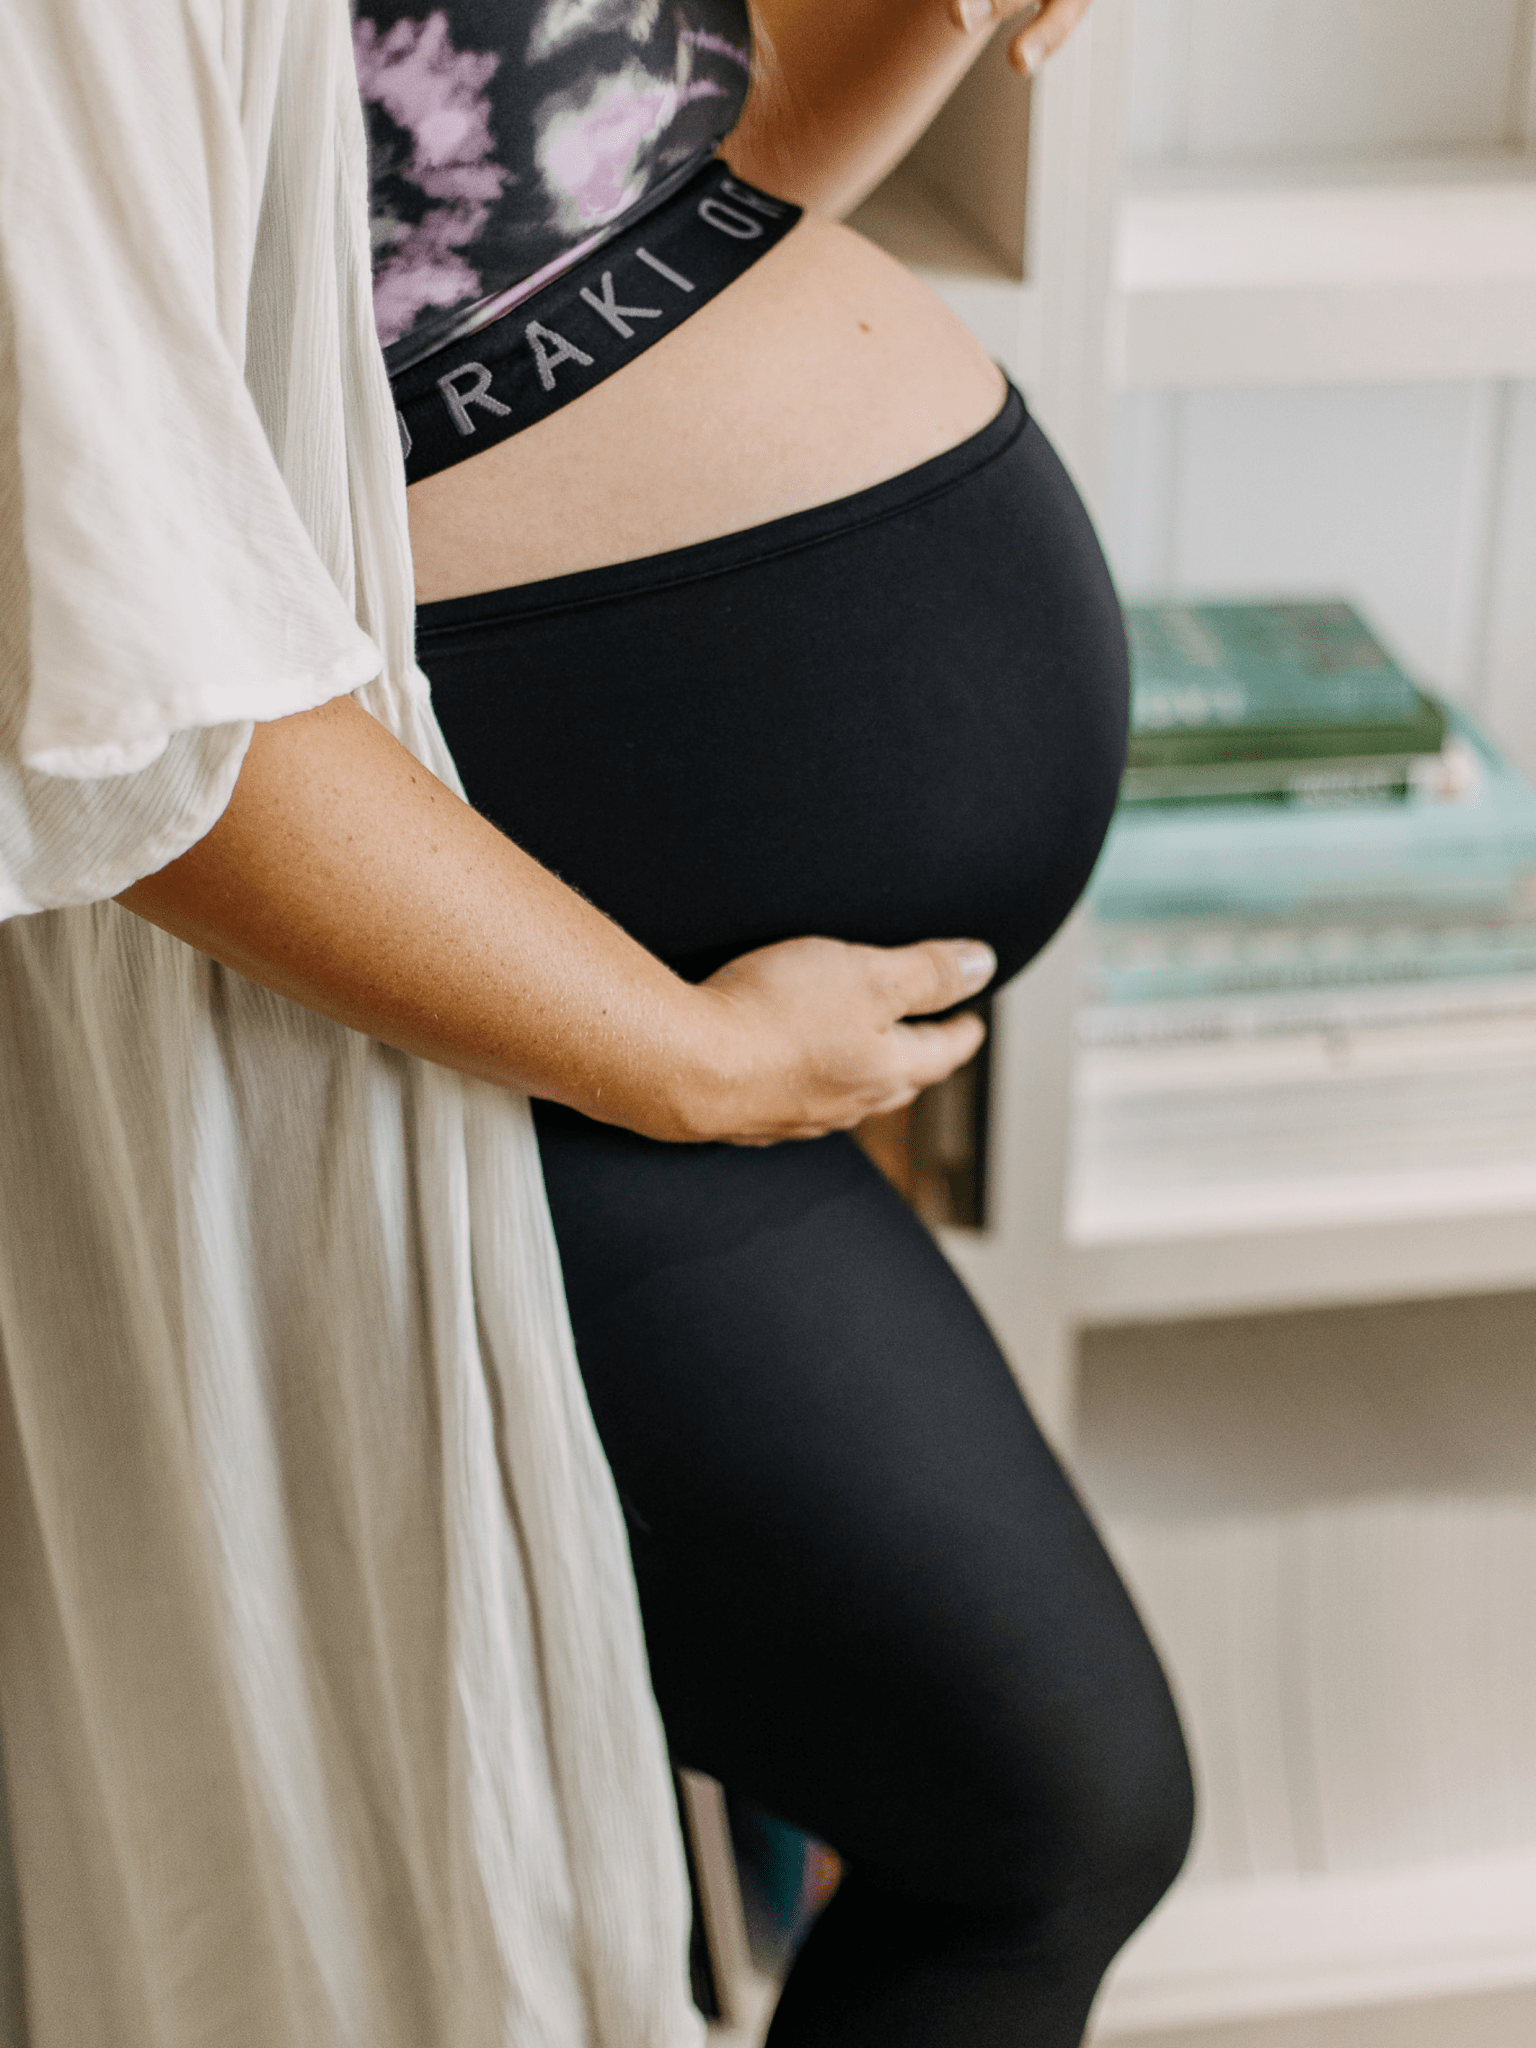 Emama Maternity Leggings - Olive - Full Length, emamaco